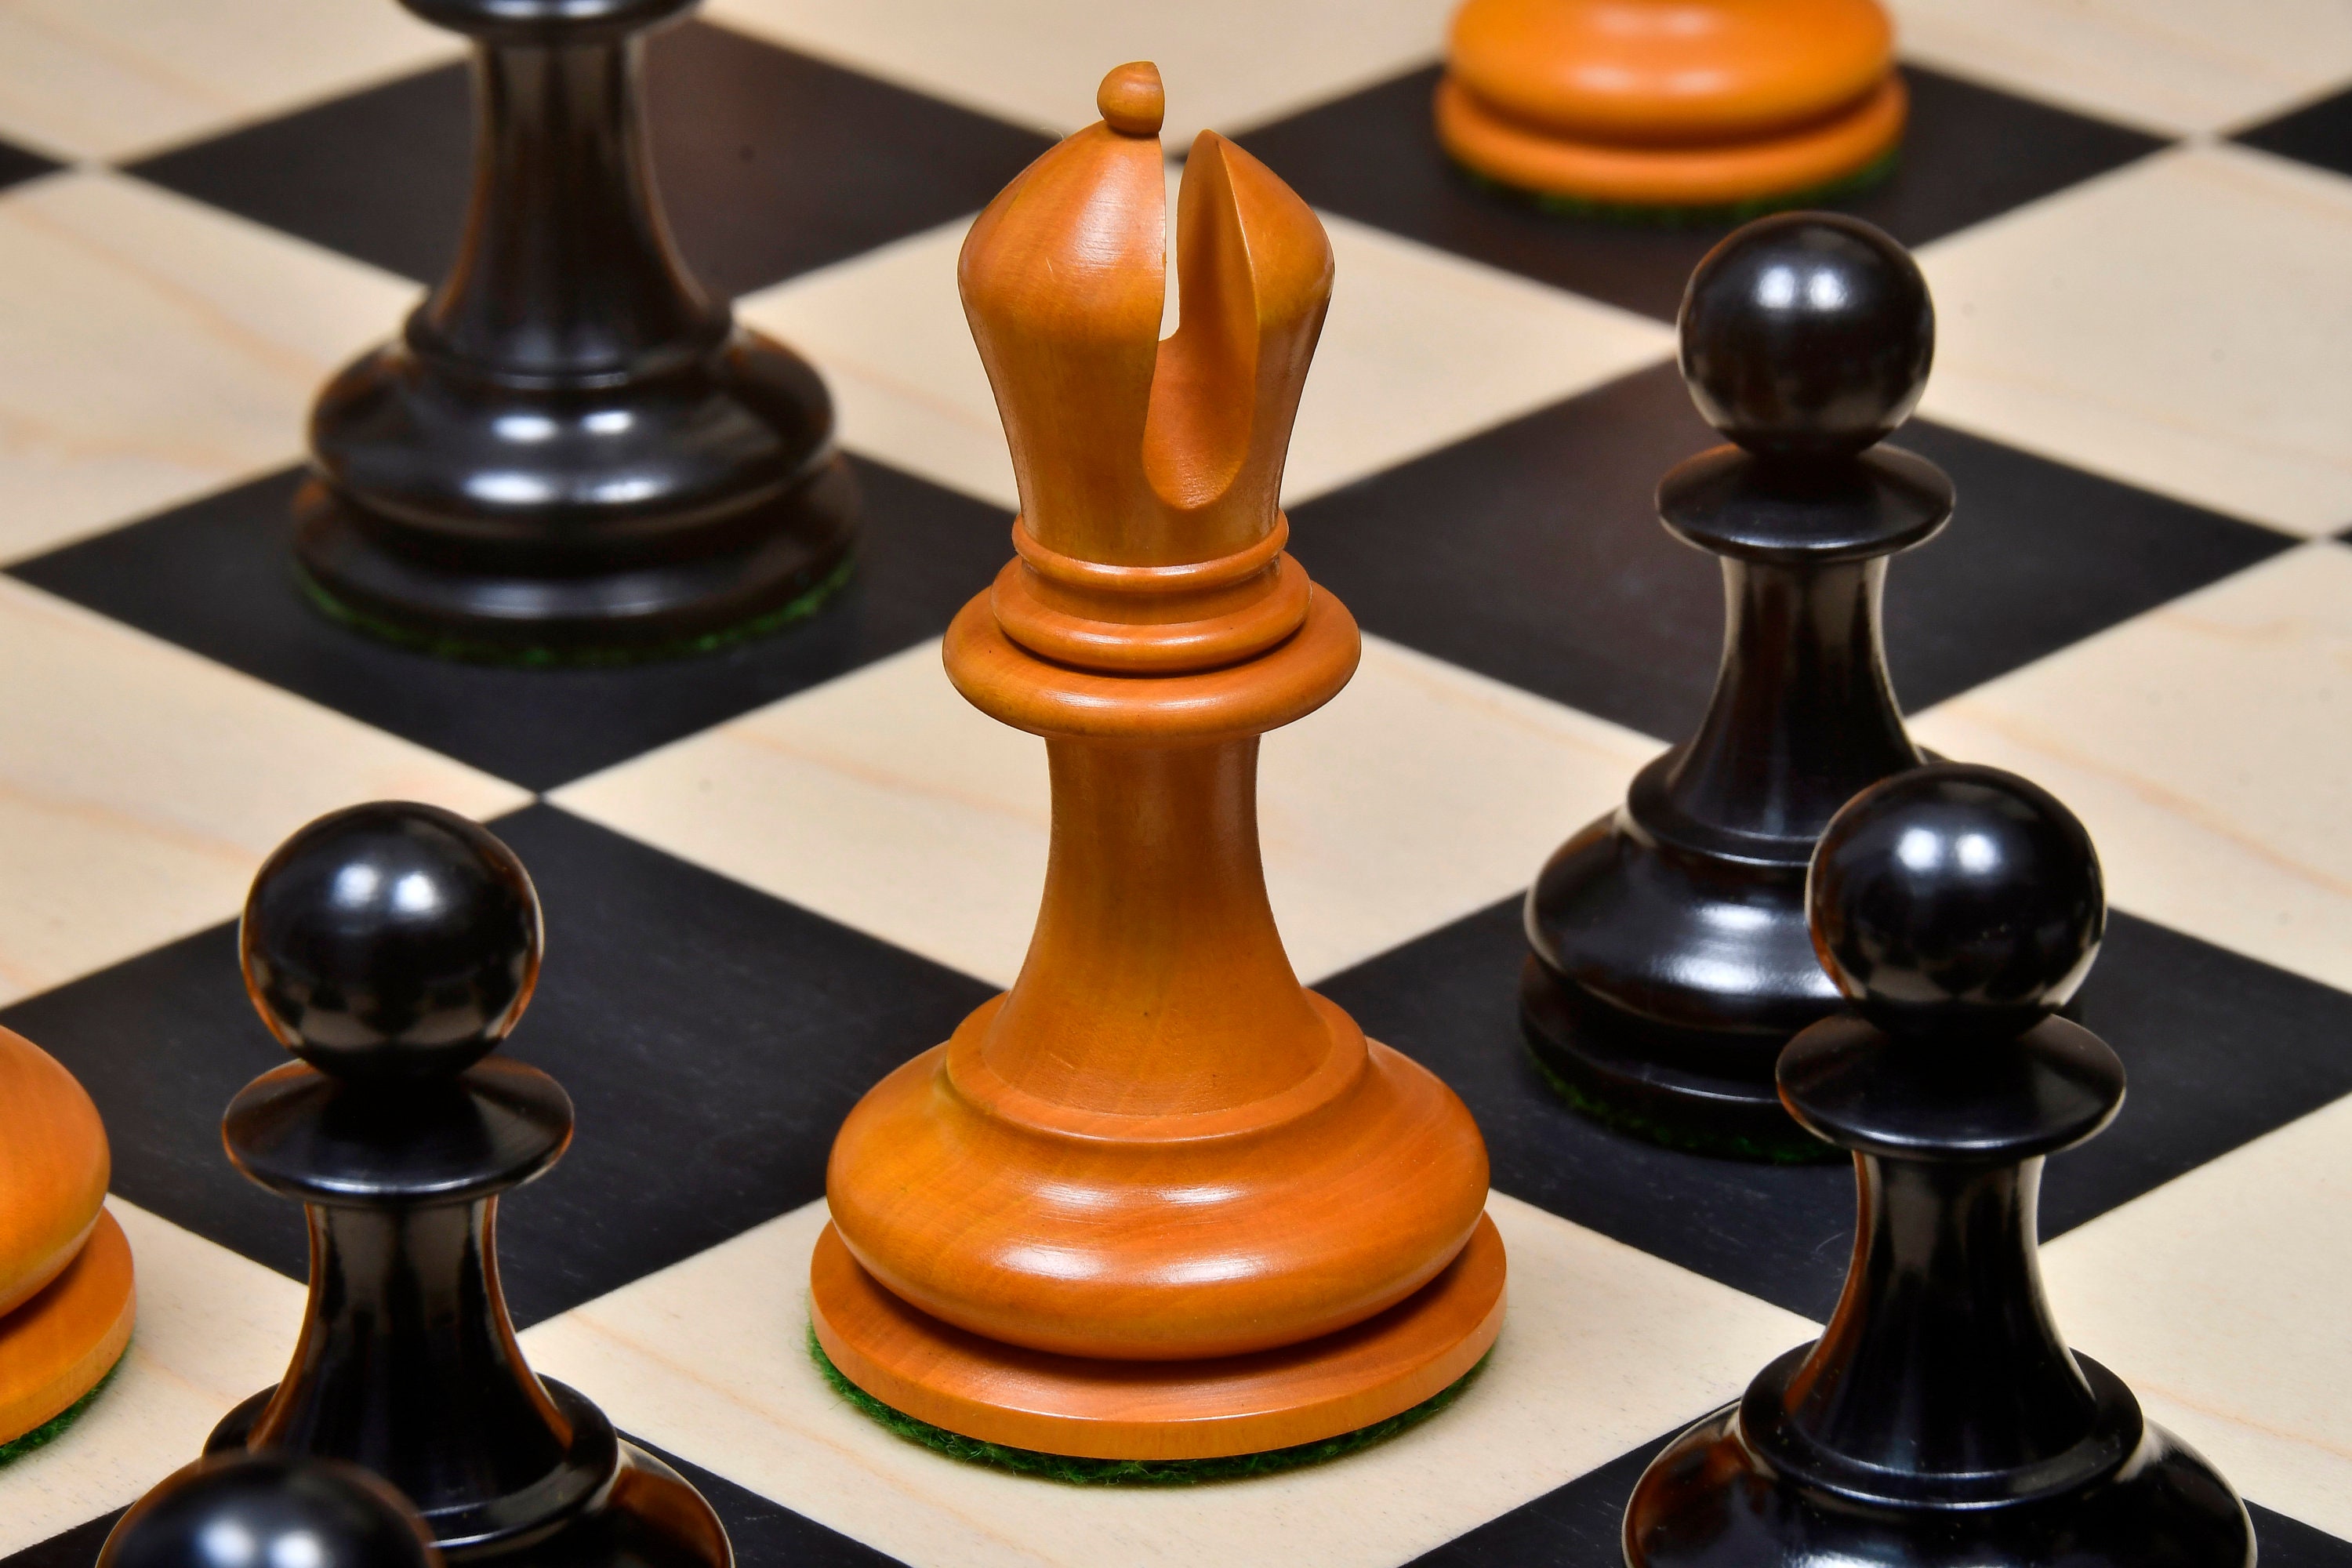 Staunton Helena Flat Board Chess Set Walnut 20 Weighted -  Norway